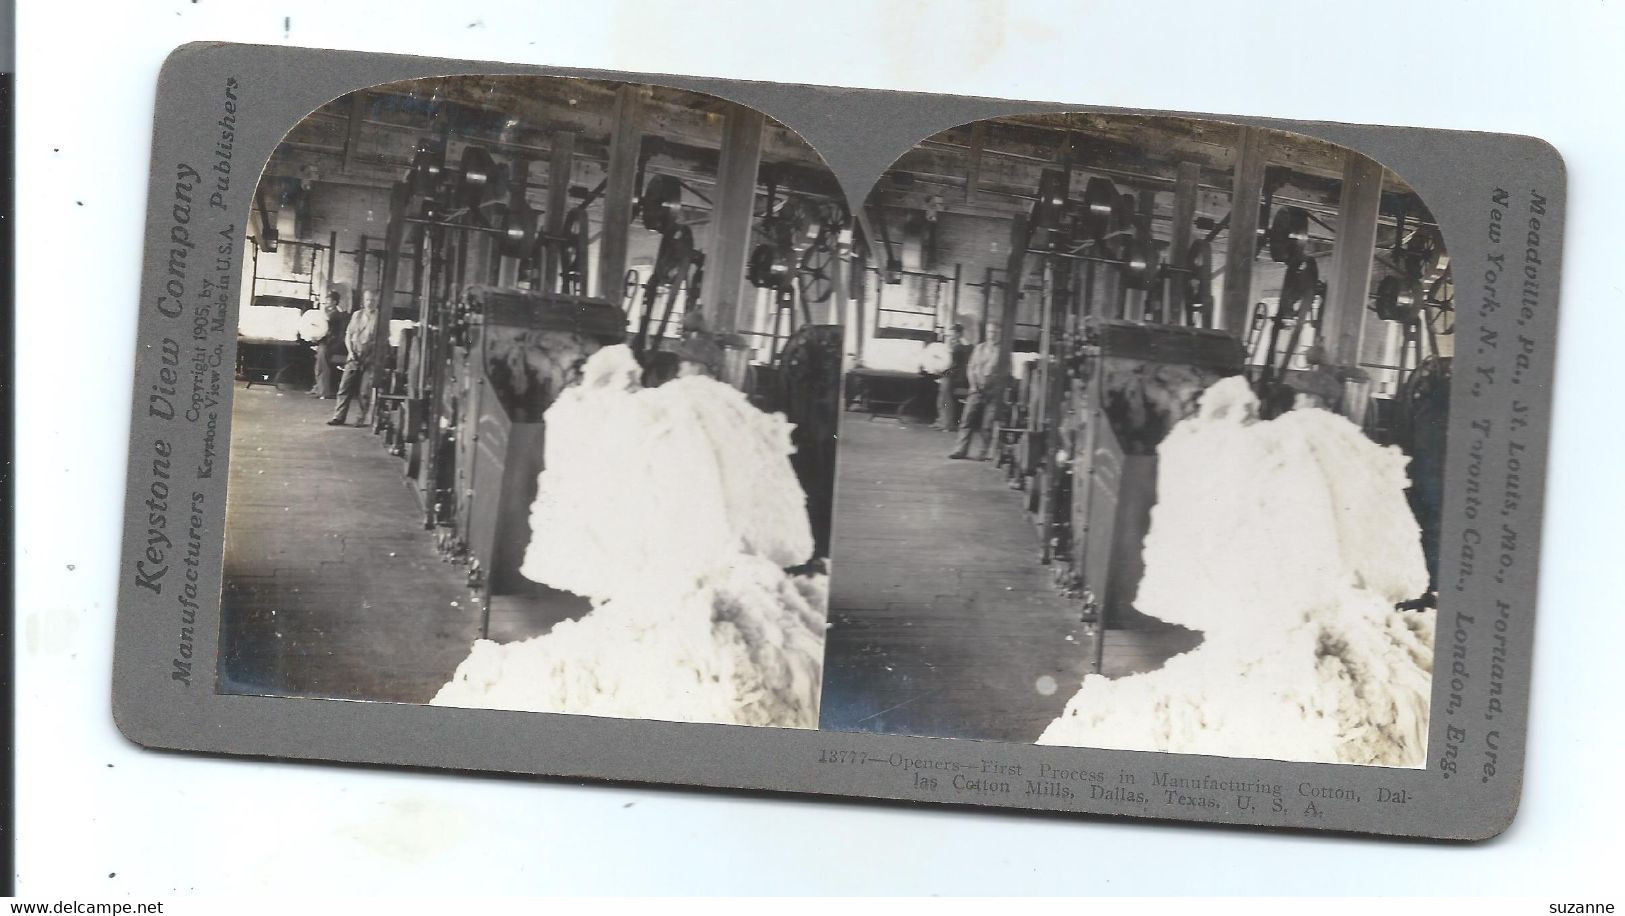 DALLAS 1900 - Vue Stéréoscopique Ancienne - Openers - First Process In Manufacturing Cotton Mills - Dallas